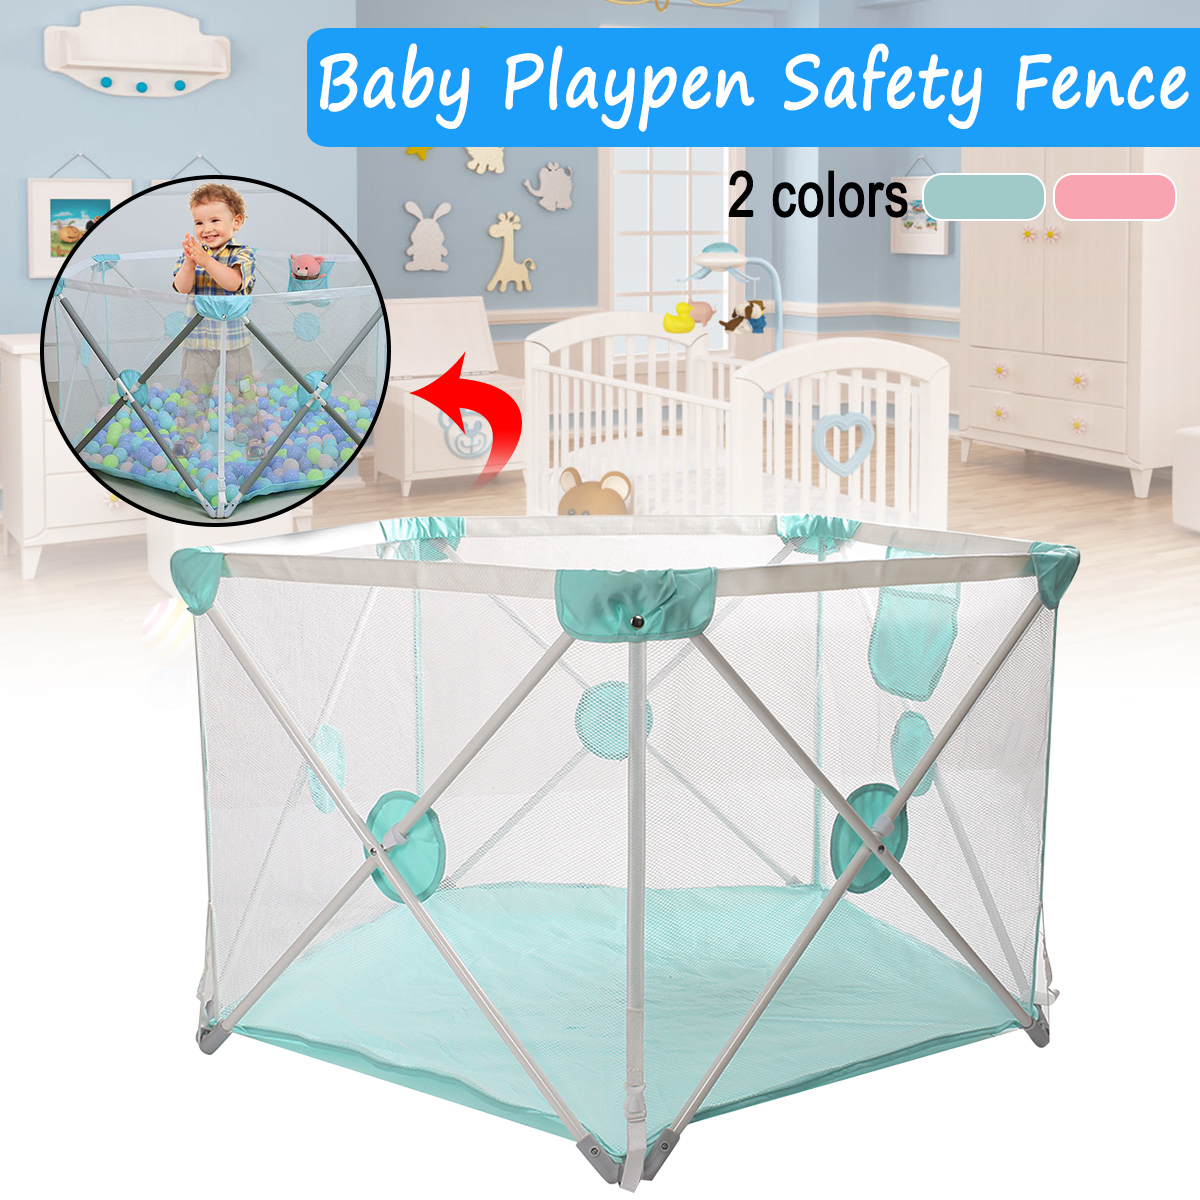 1107273-cm-Children-playpen-Safety-Fence-Baby-Playpen-Fence-Safety-Barrier-For-0-6Y-Kids-Children-Pl-1634178-1